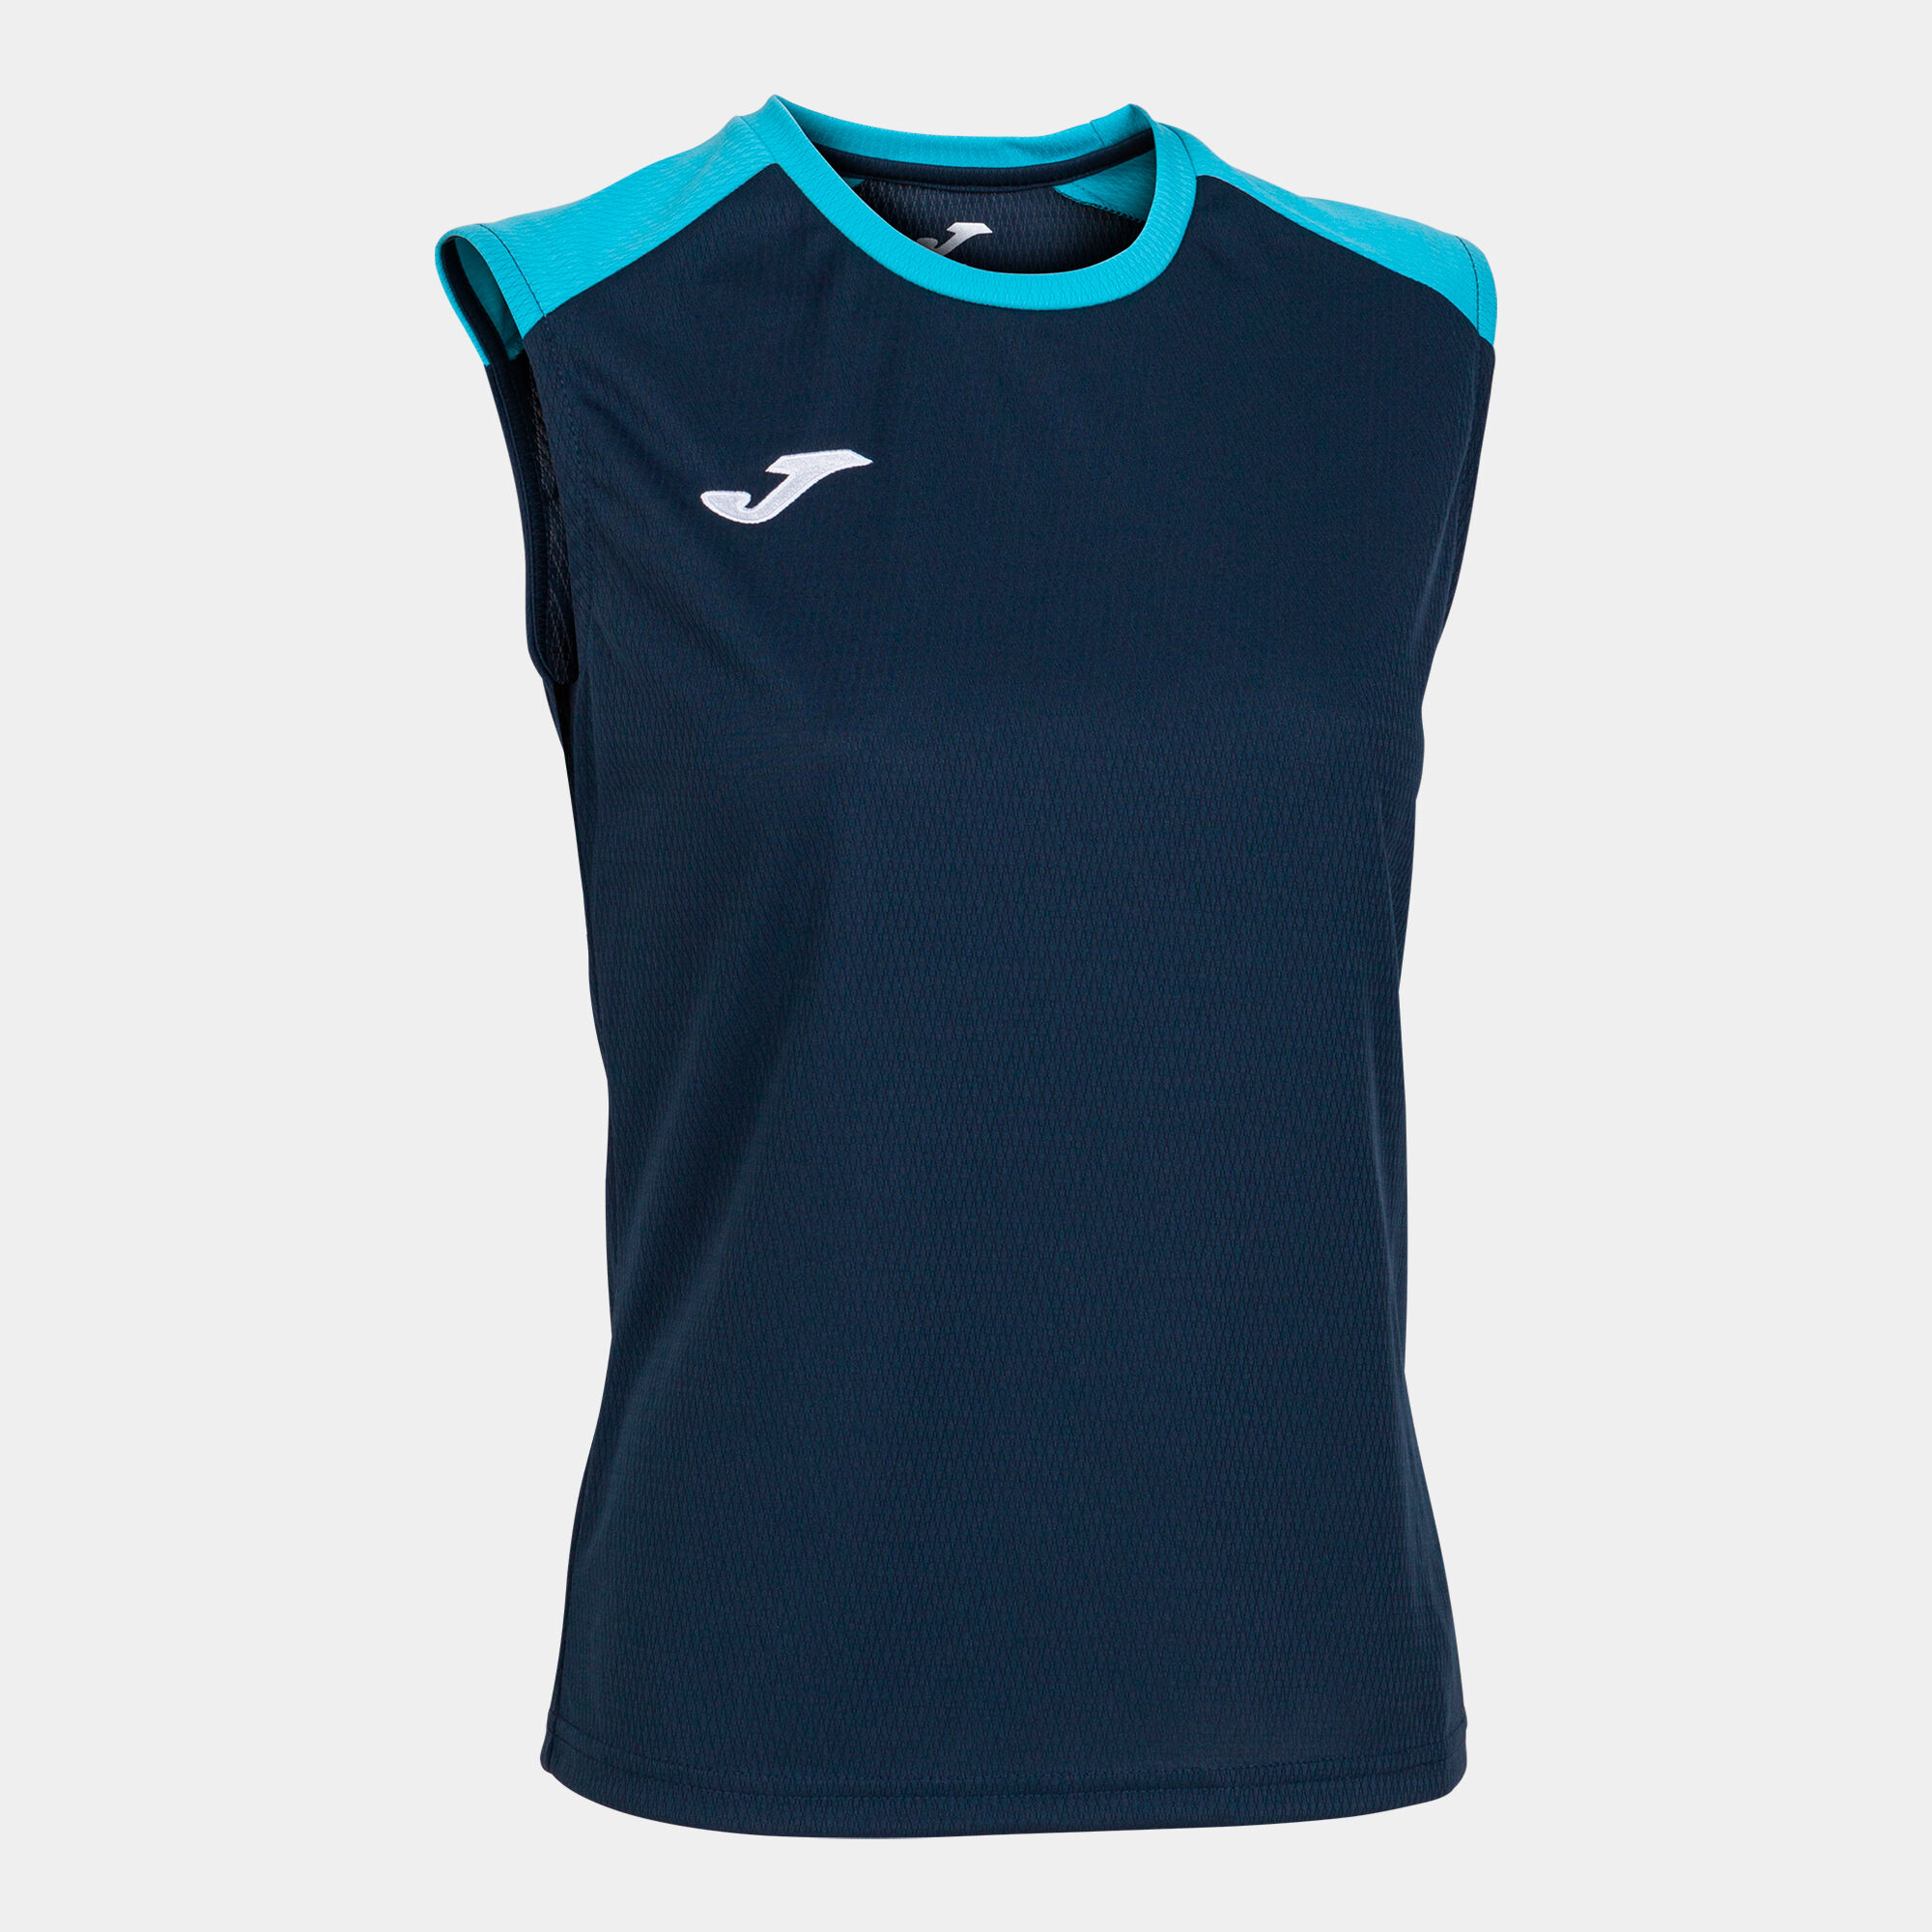 Schulterriemen-shirt frau Eco Championship marineblau neon-türkis